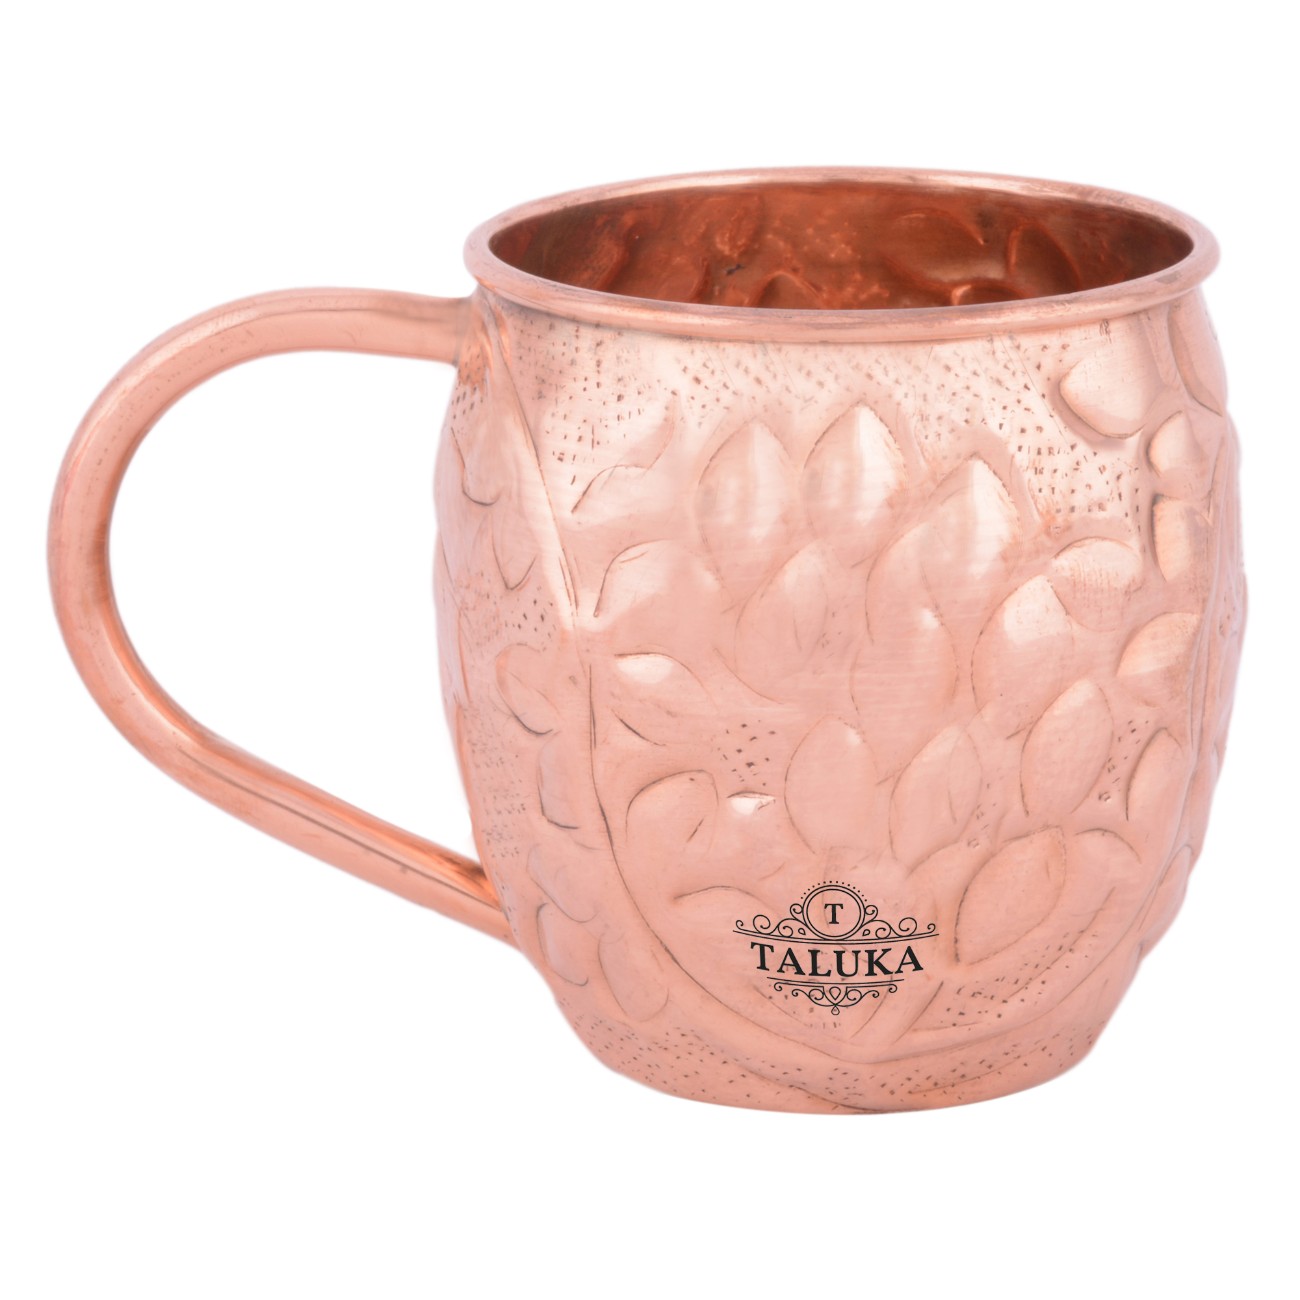 Copper Leaf Design Moscow Mule Wine Beer Mug For Bar Ware Restaurant Home Gift Purpose